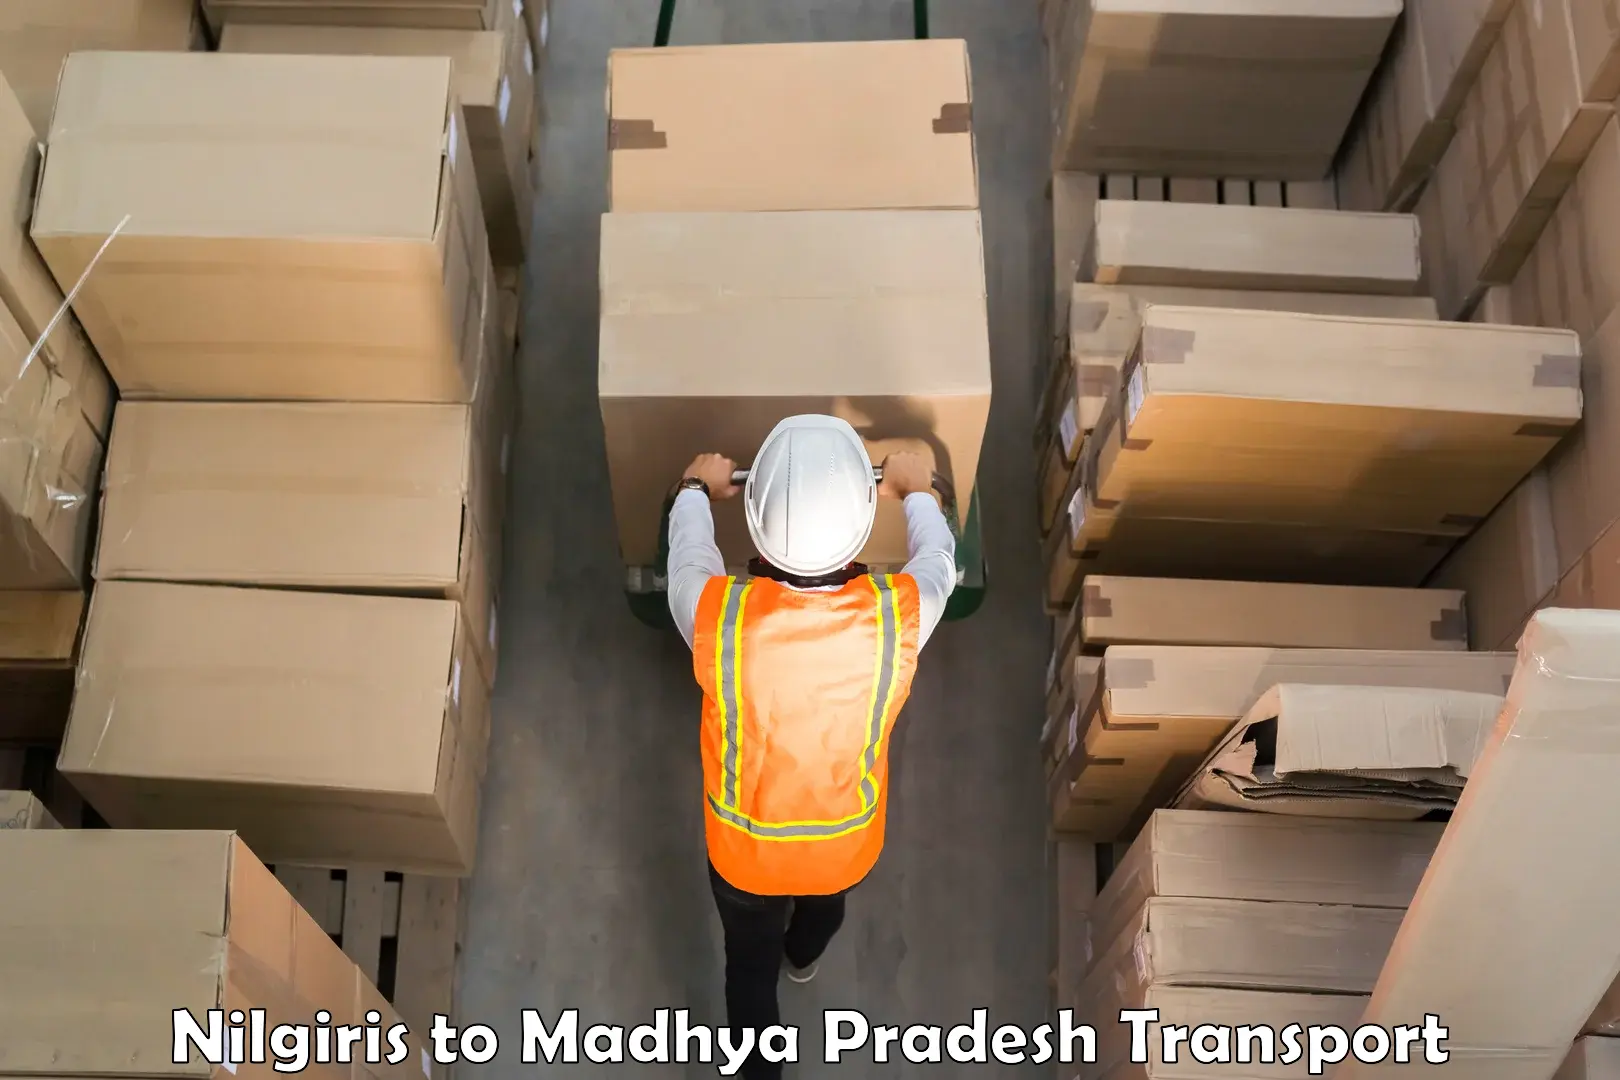 Truck transport companies in India Nilgiris to Pachore